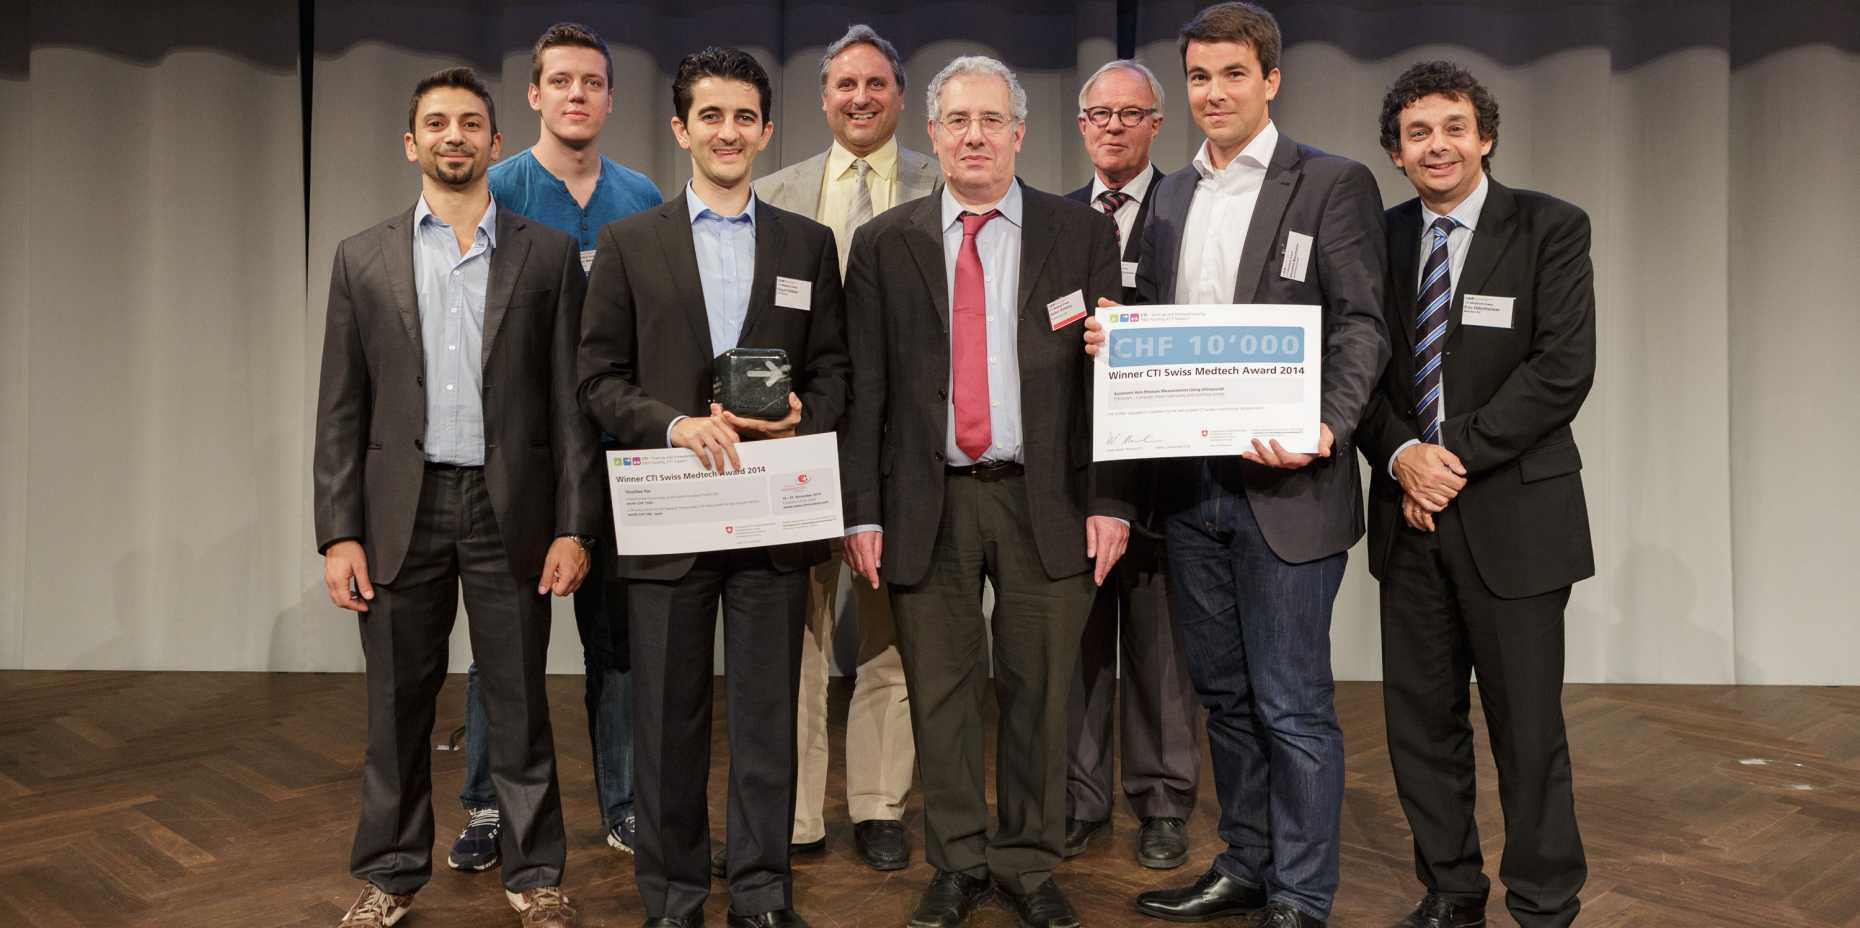 Enlarged view: Veinpress GmbH won the CTI Swiss Medtech Award 